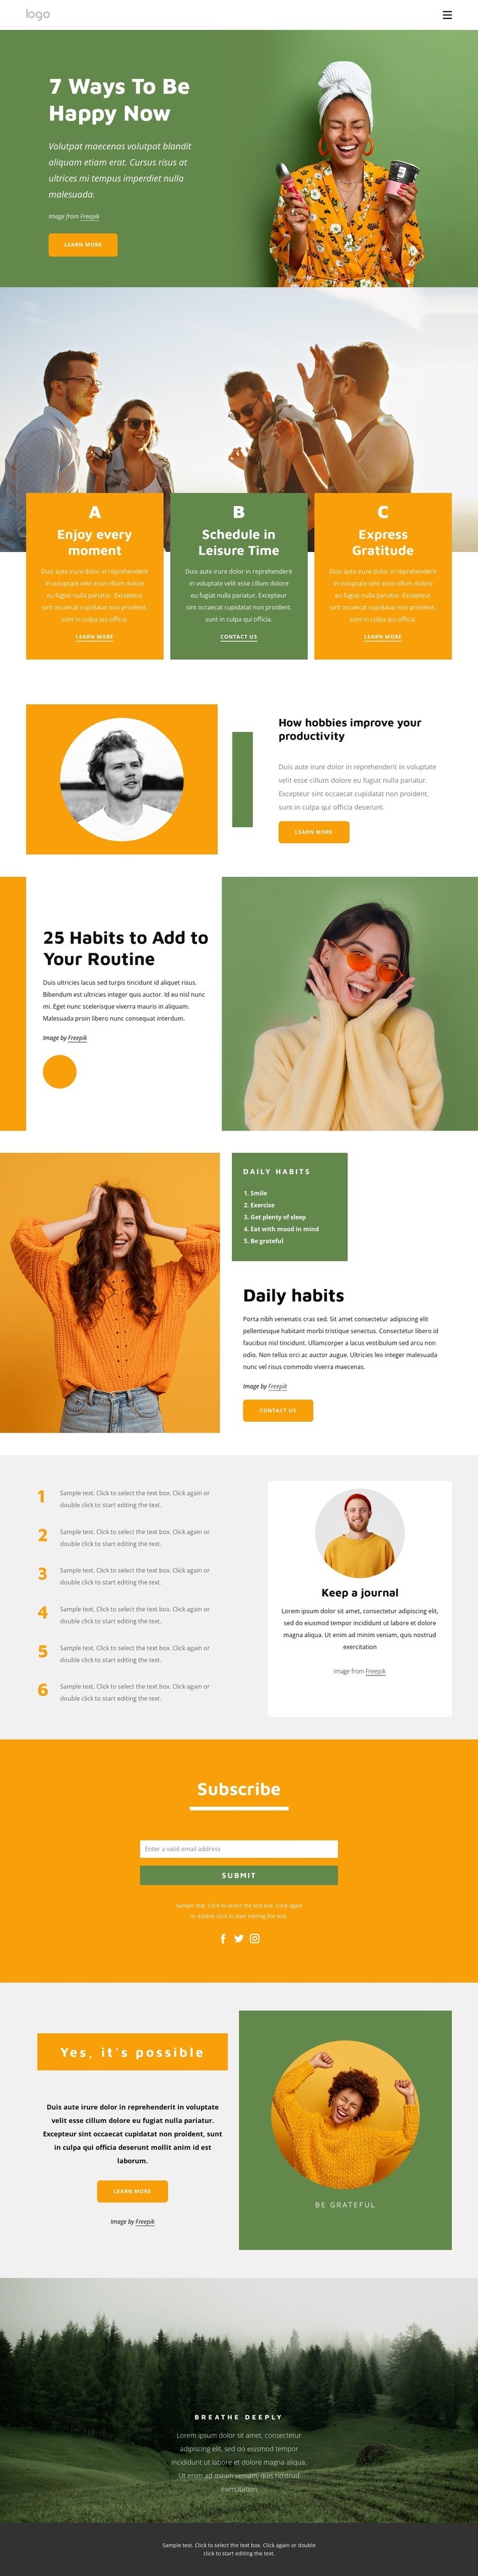 Habits of happy people Web Page Design